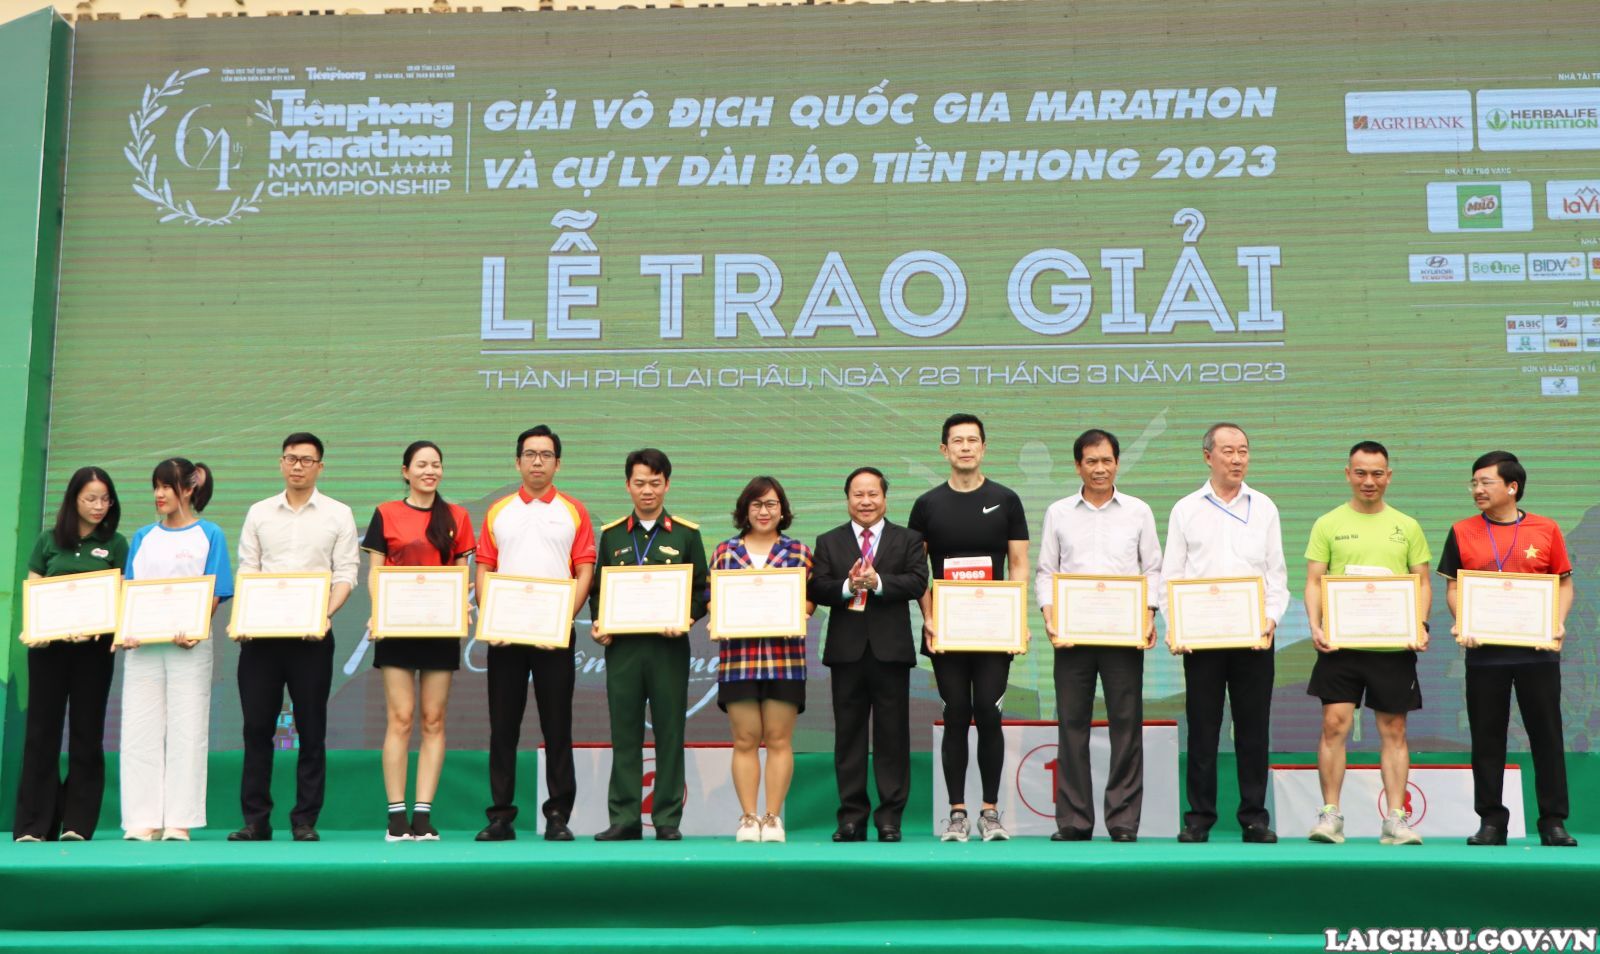 giai tien phong marathon 2023 01